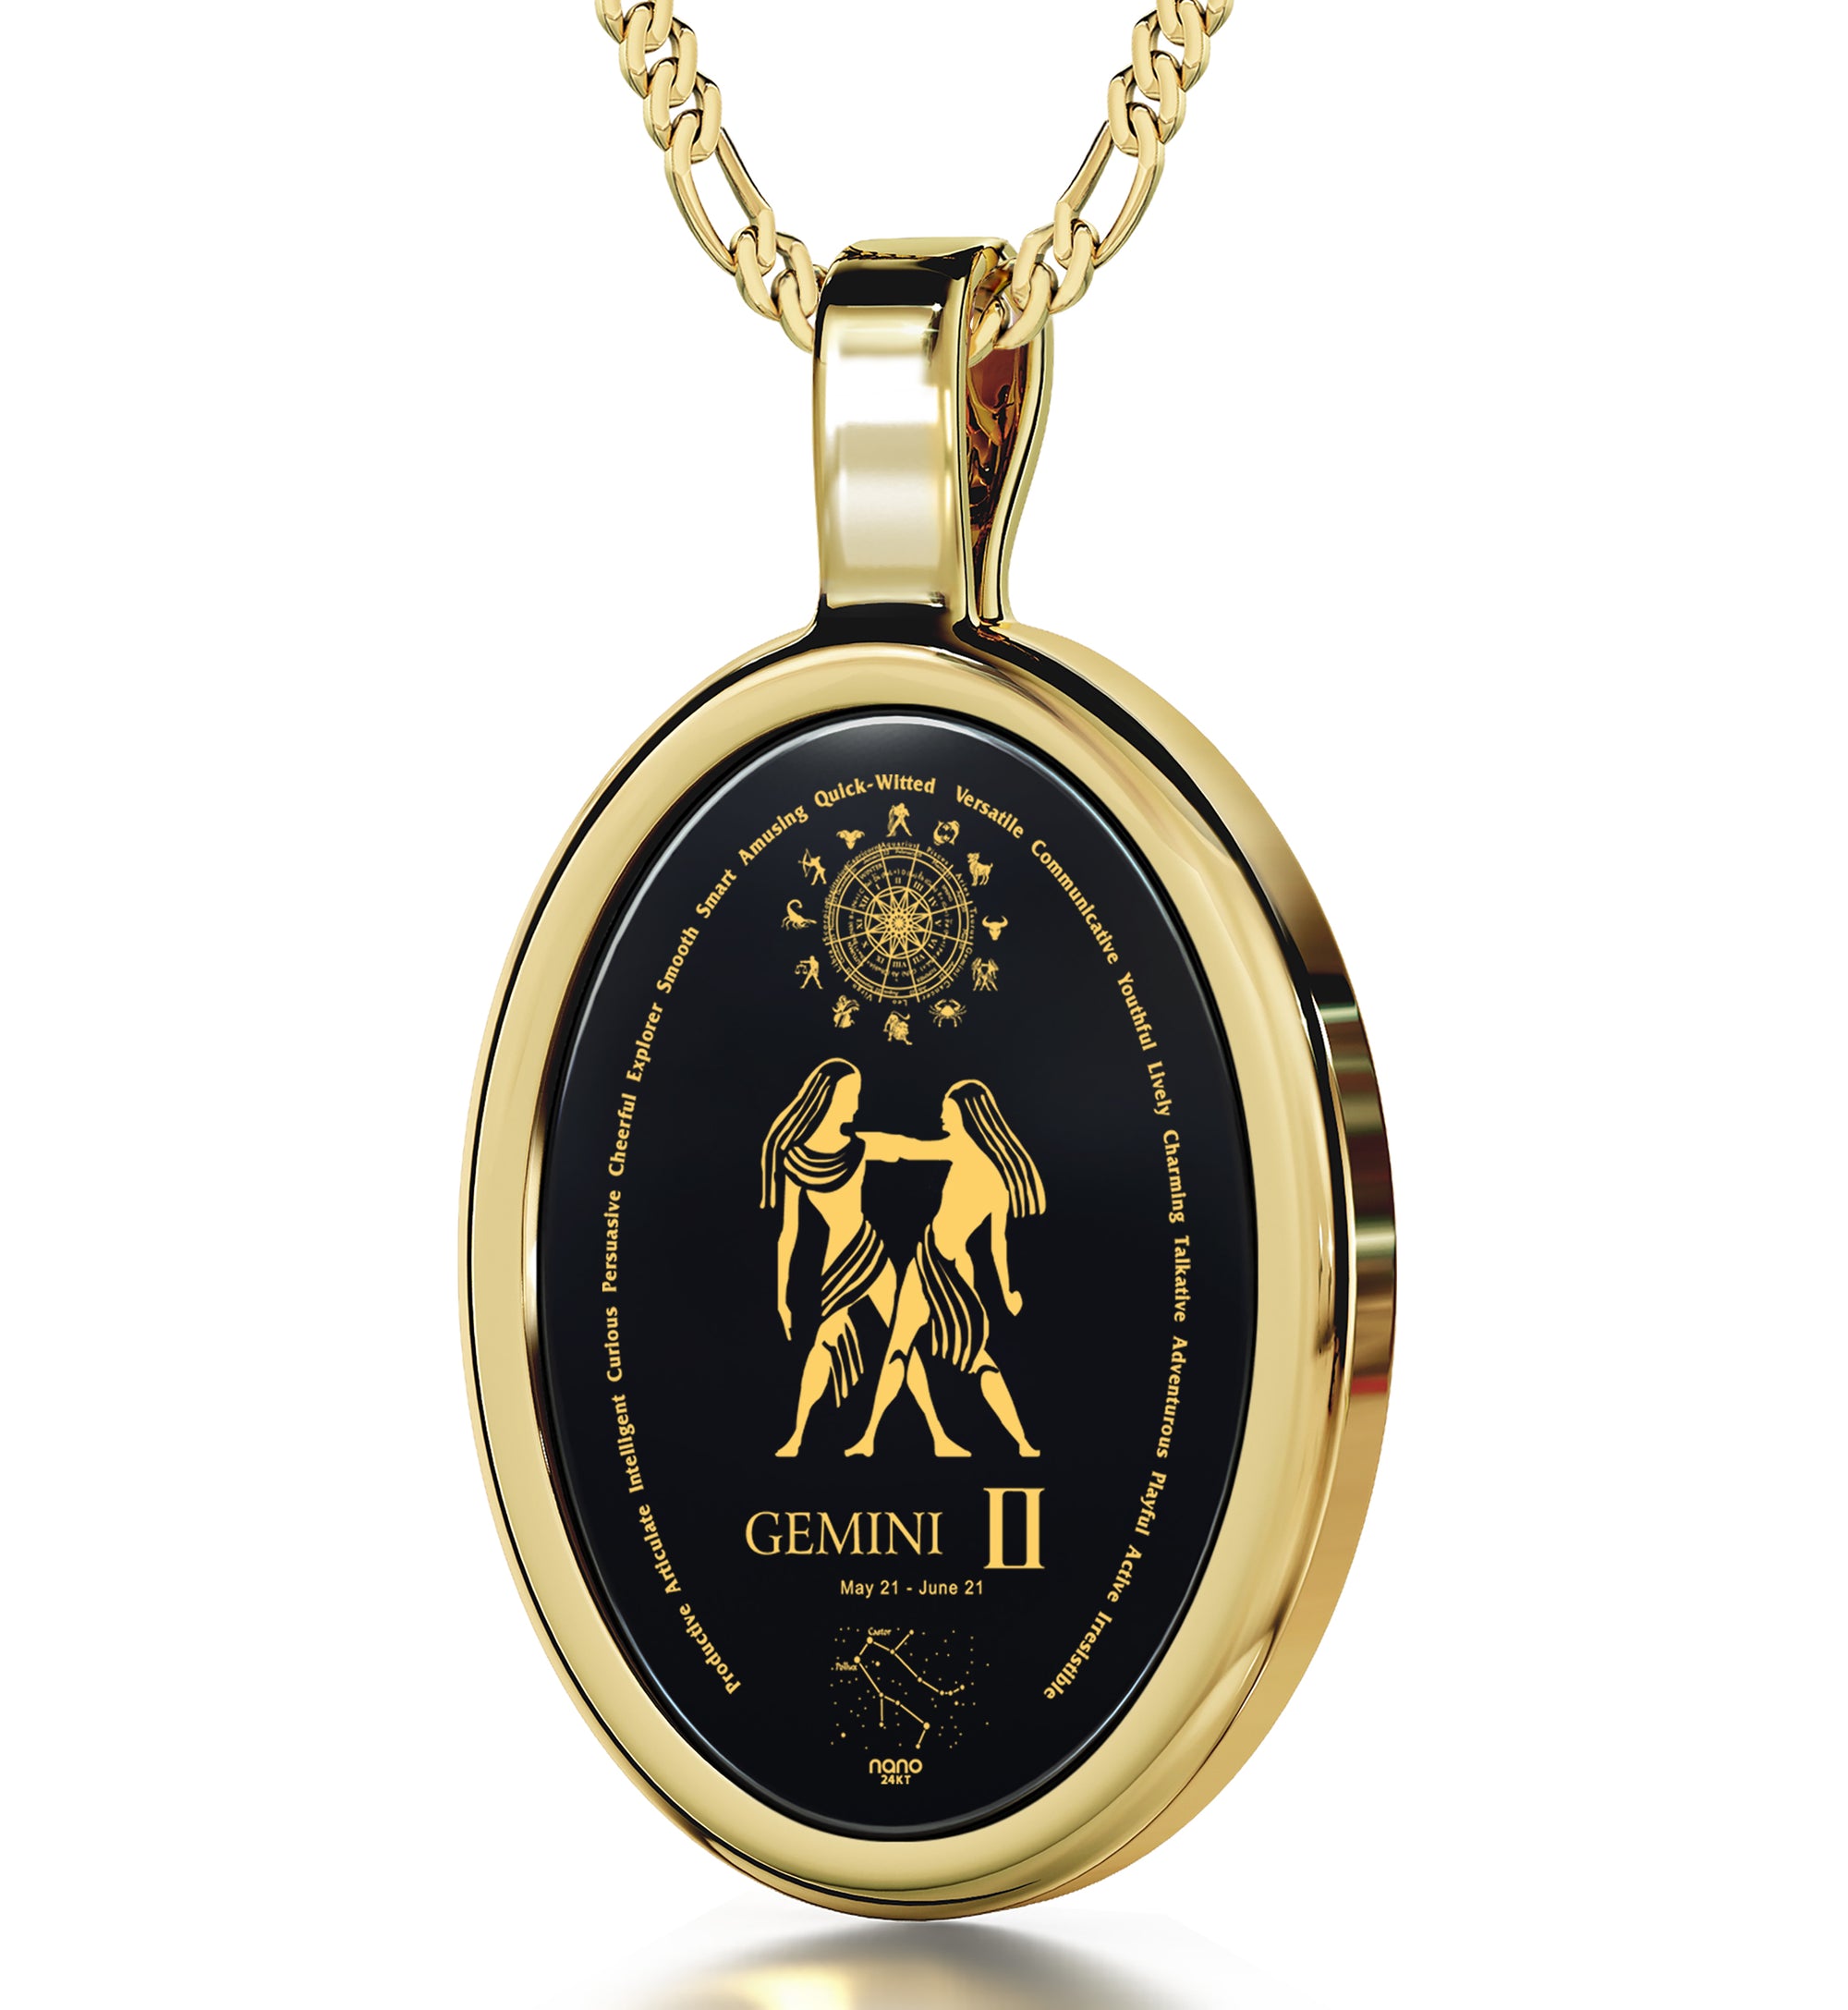 Gemini - | 24k Zodiac World\'s Gift Jewelry NanoStyle Only Inscribed Necklace Gold Unique